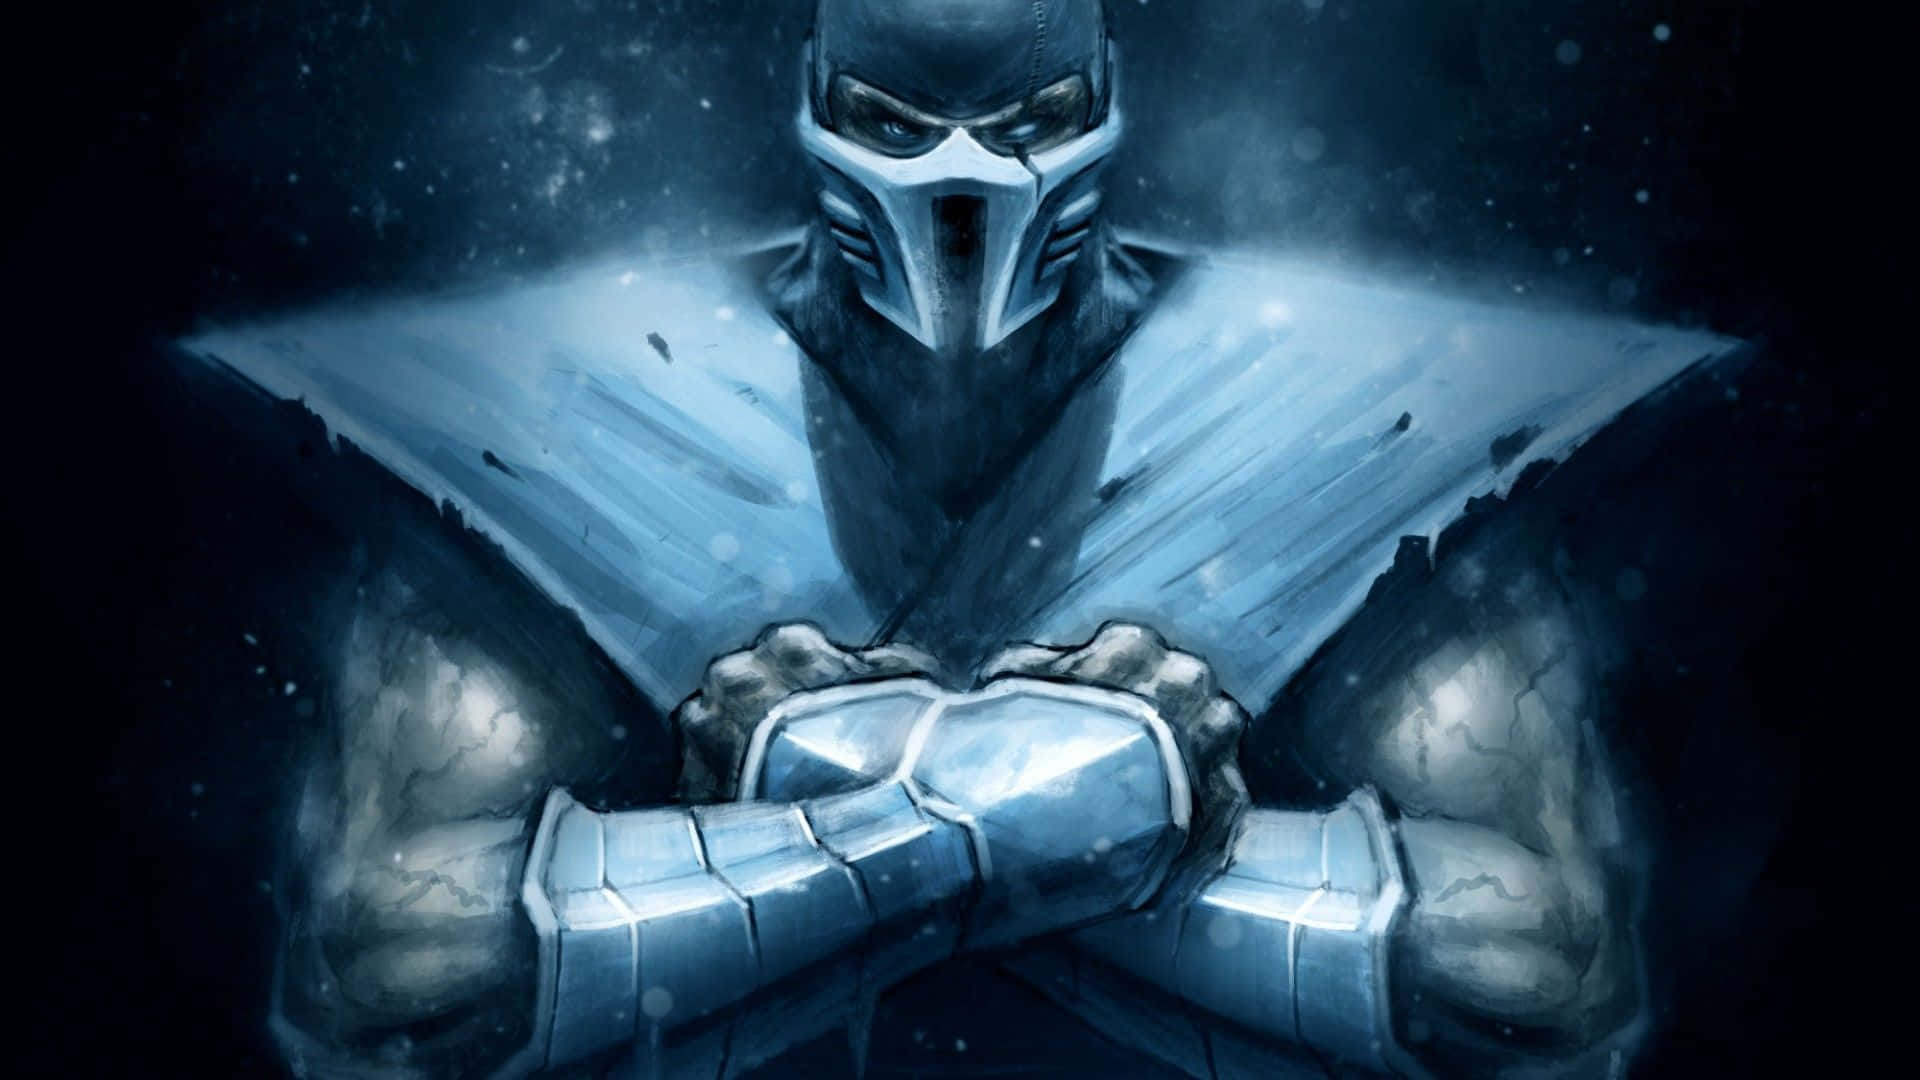 The Icy Power of Sub-Zero in Mortal Kombat Wallpaper